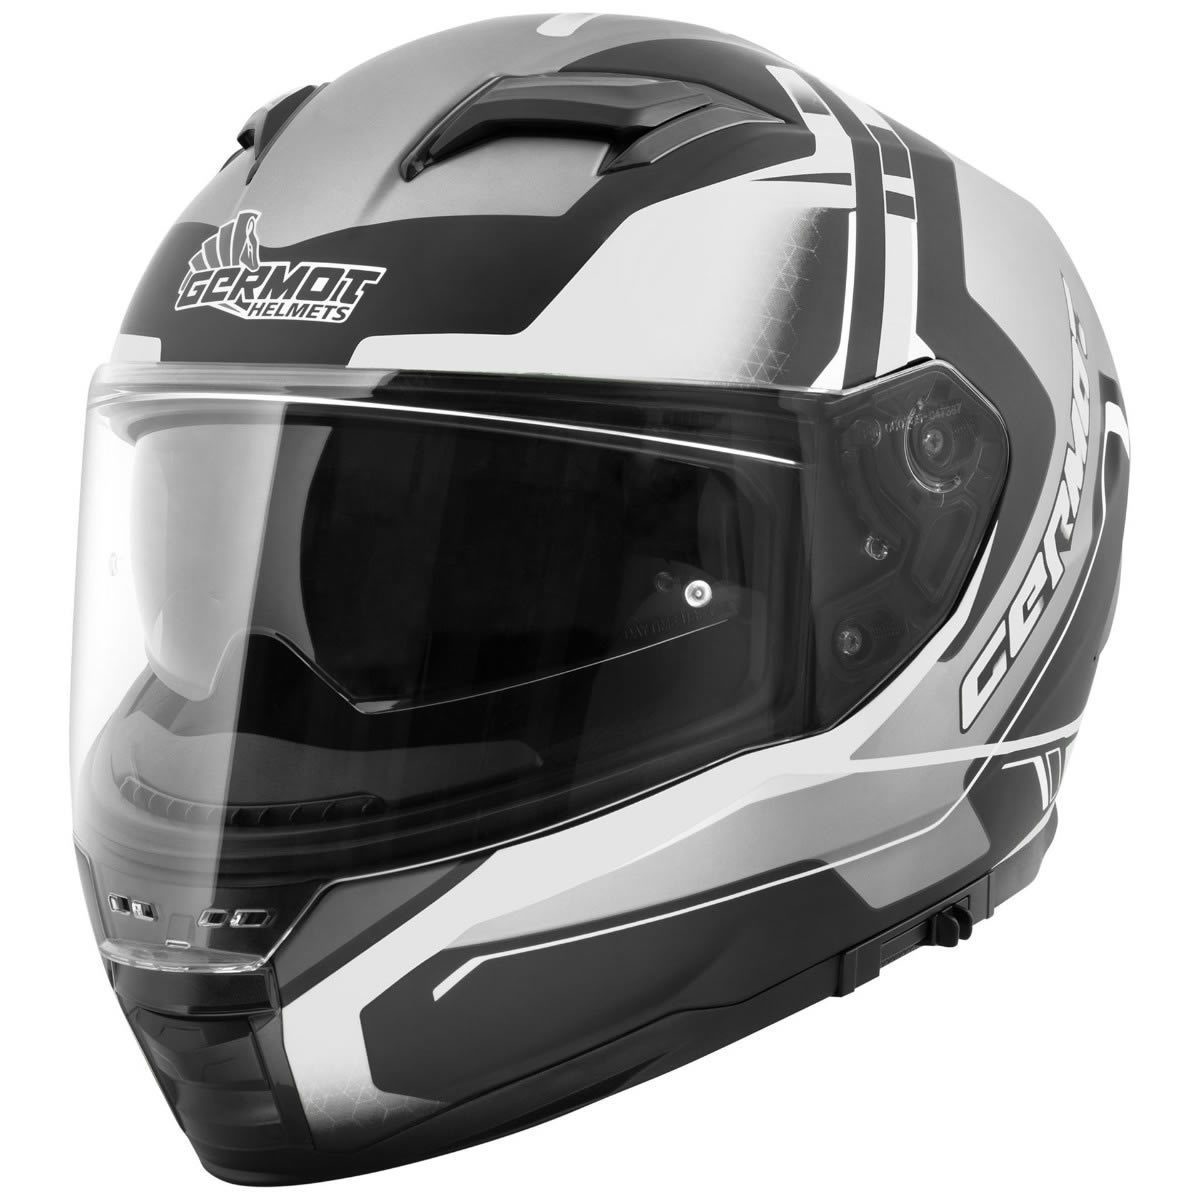 Germot GM 350 Helm, schwarz-grau-weiß matt